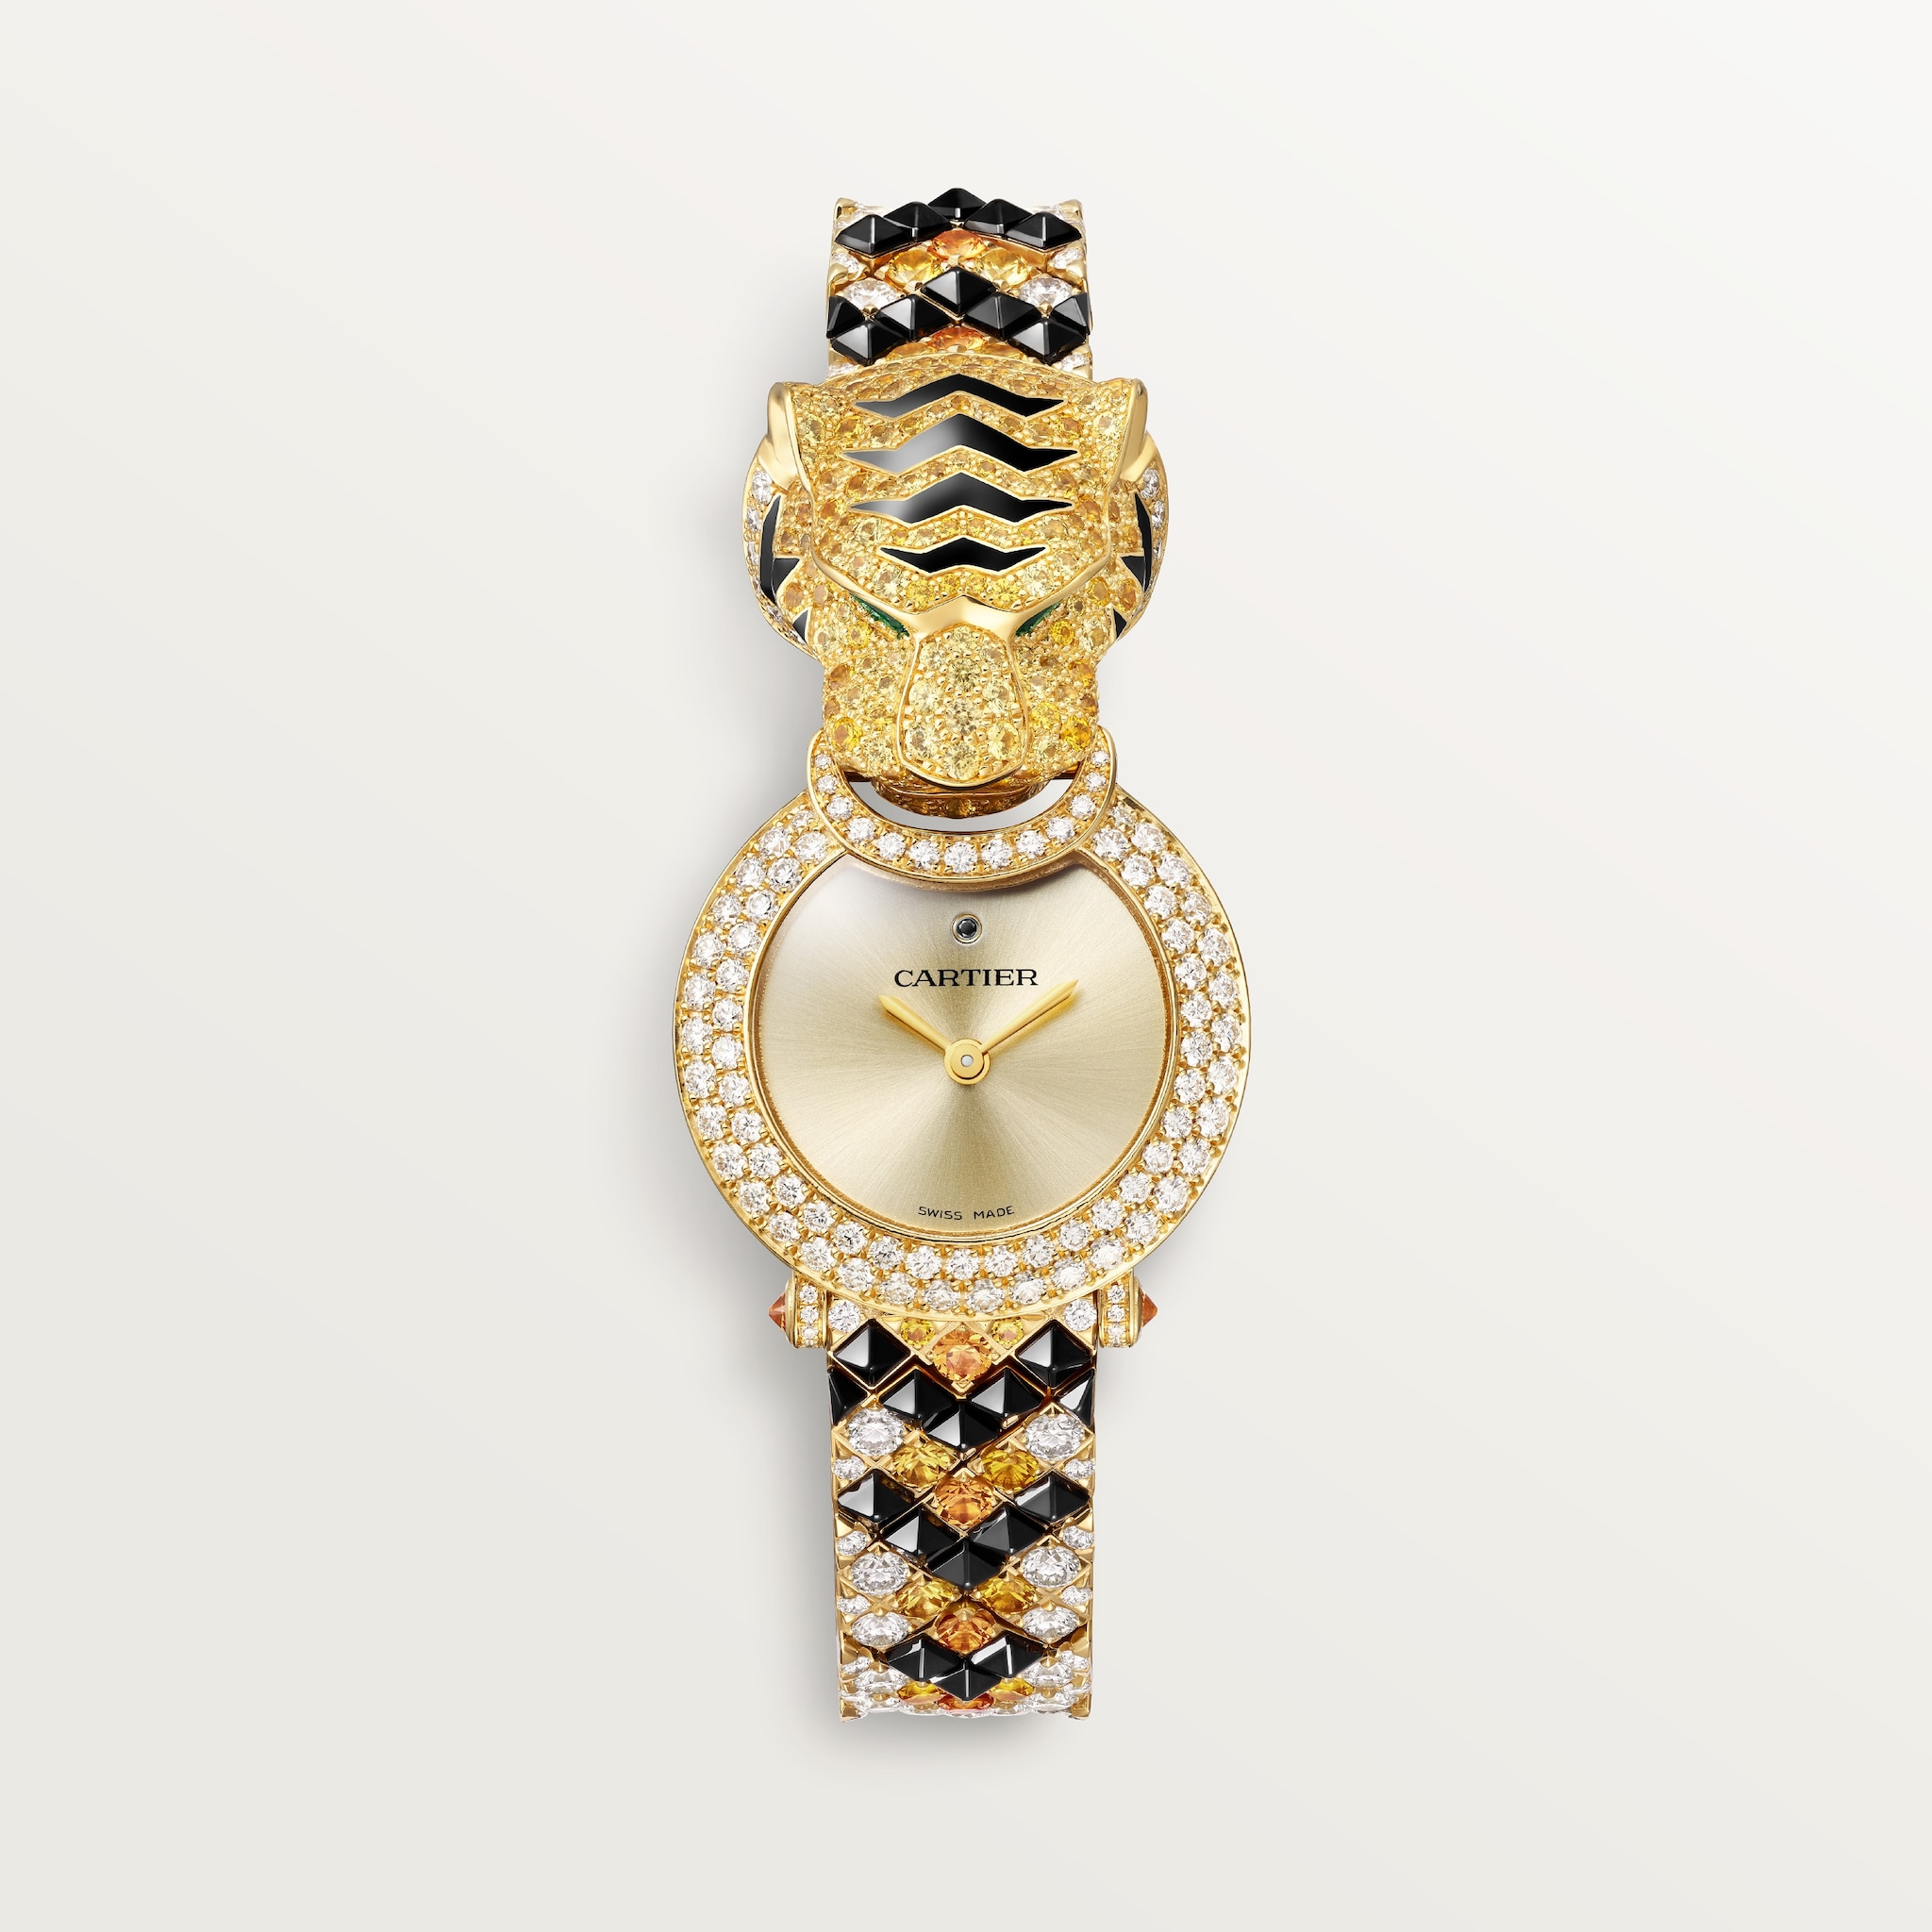 Animal Jewelry watch 23.6mm, quartz movement, yellow gold, sapphires, emeralds, diamonds